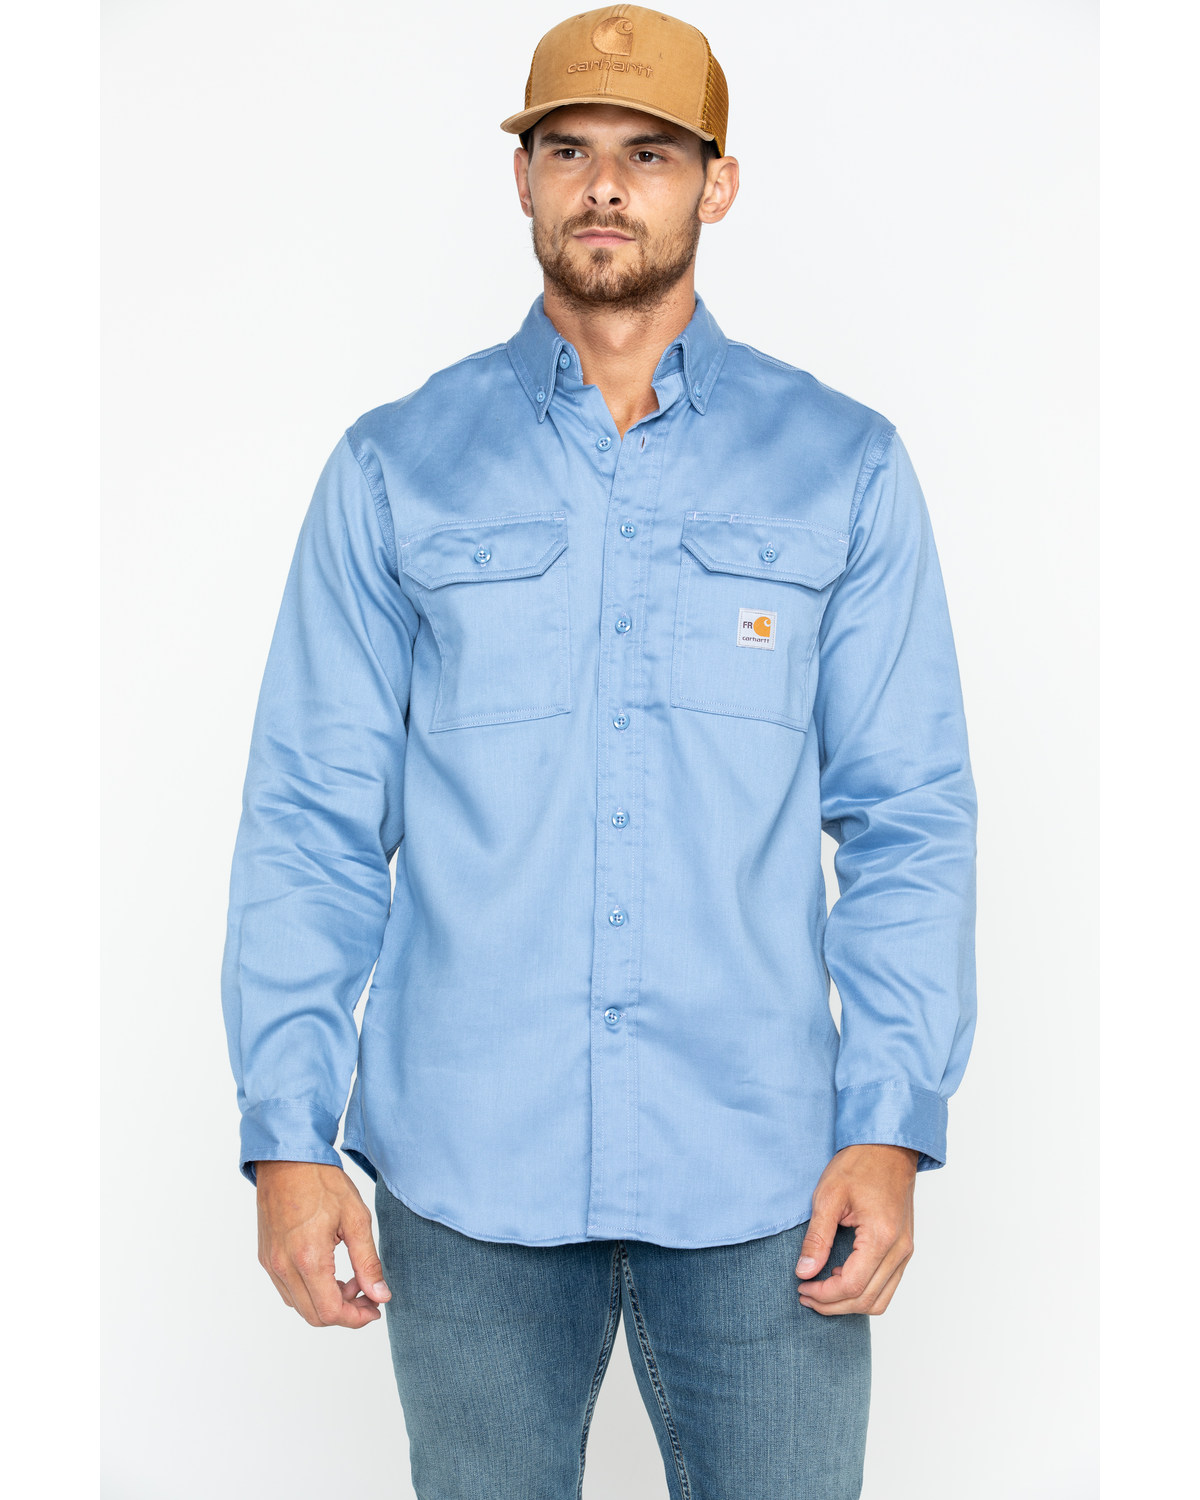 Carhartt Men's FR Dry Twill Long Sleeve Work Shirt